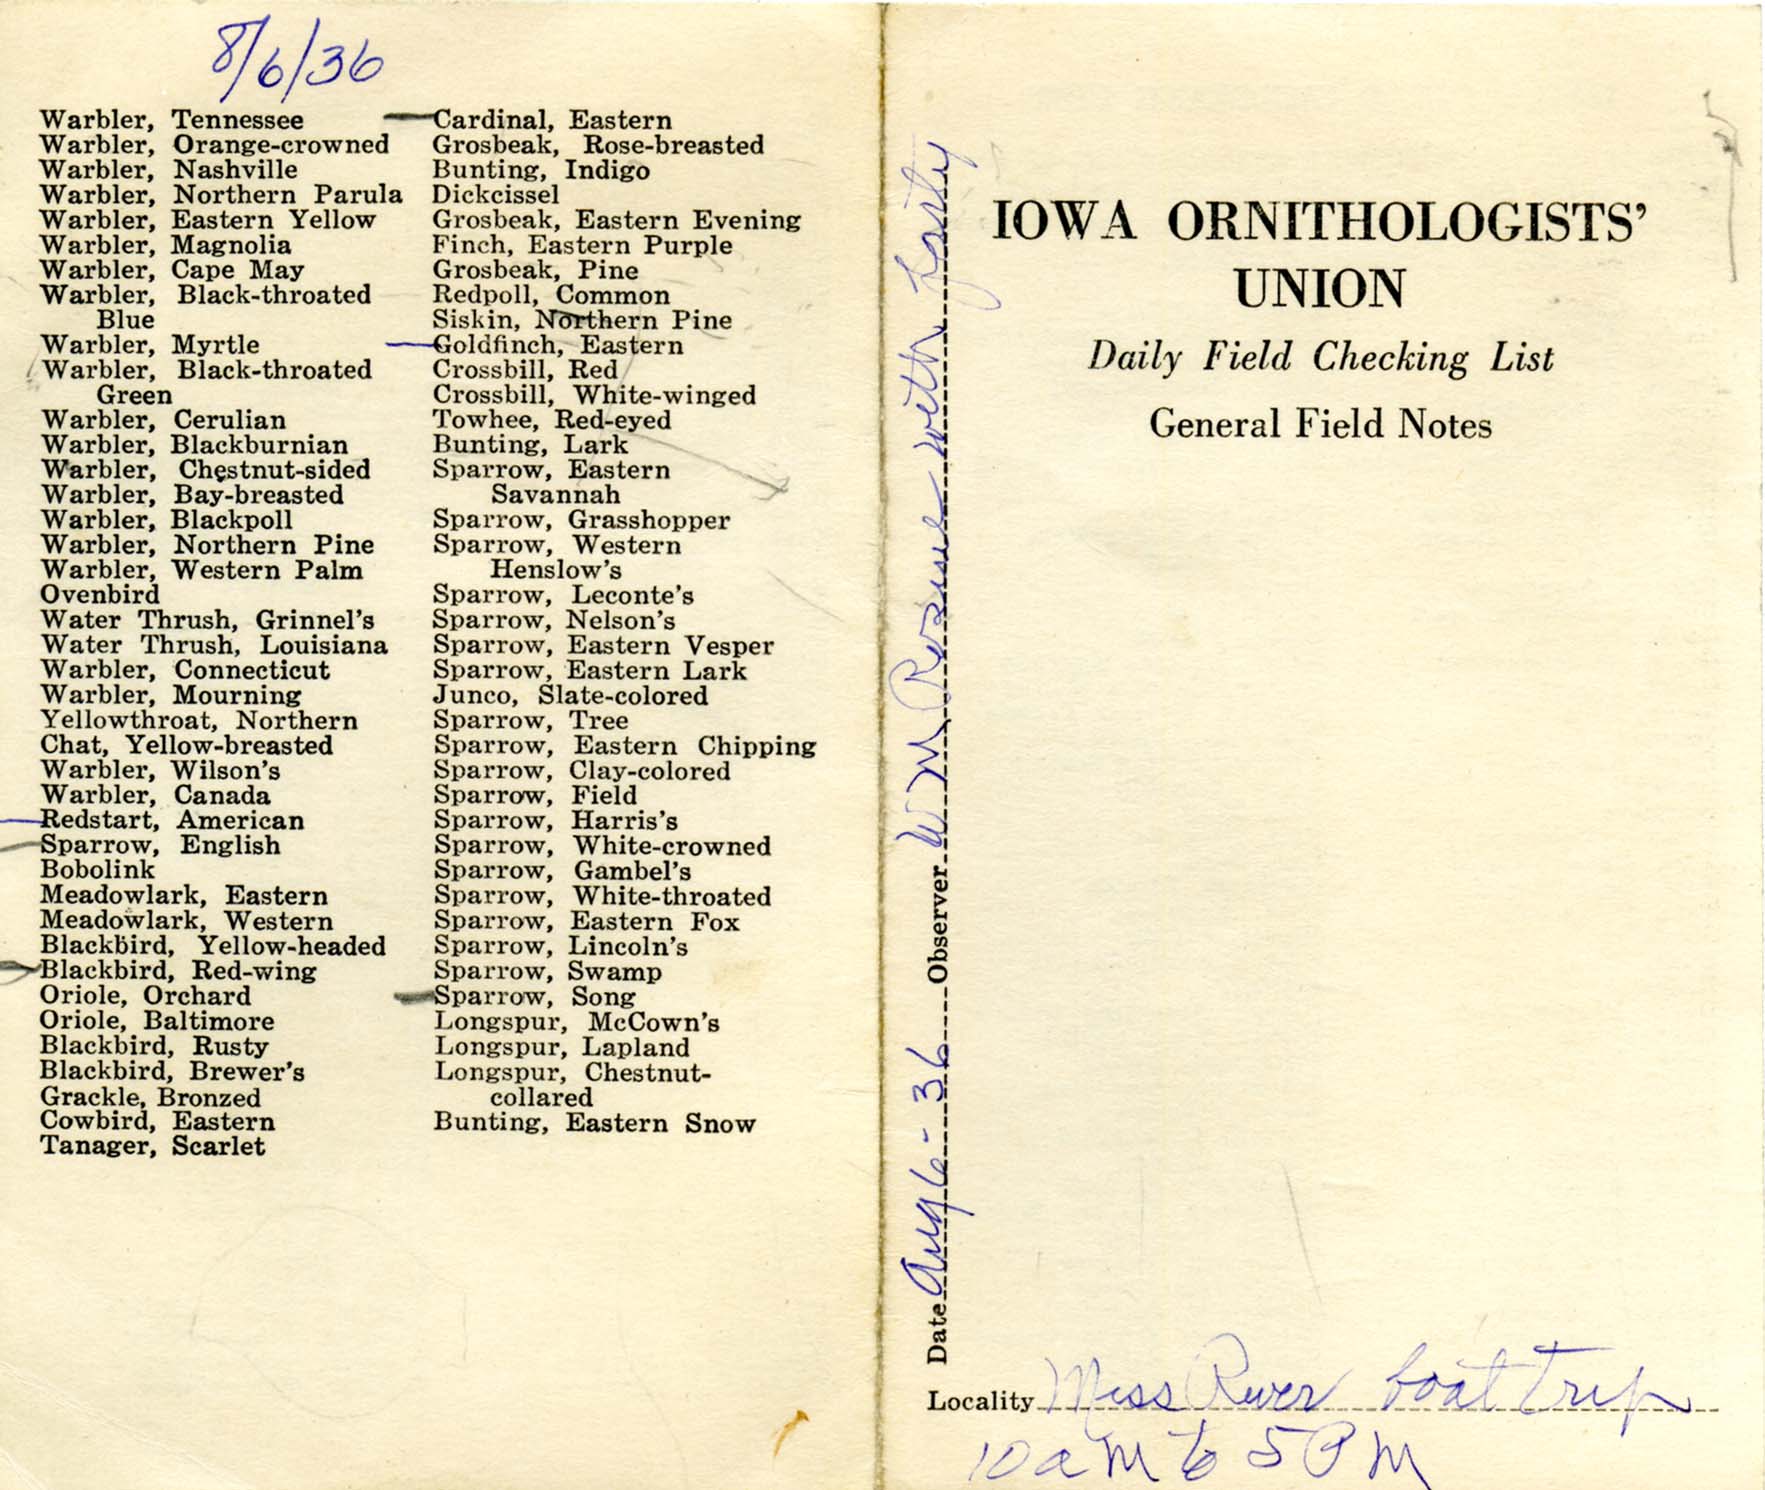 Daily field checking list, Walter Rosene, August 6, 1936